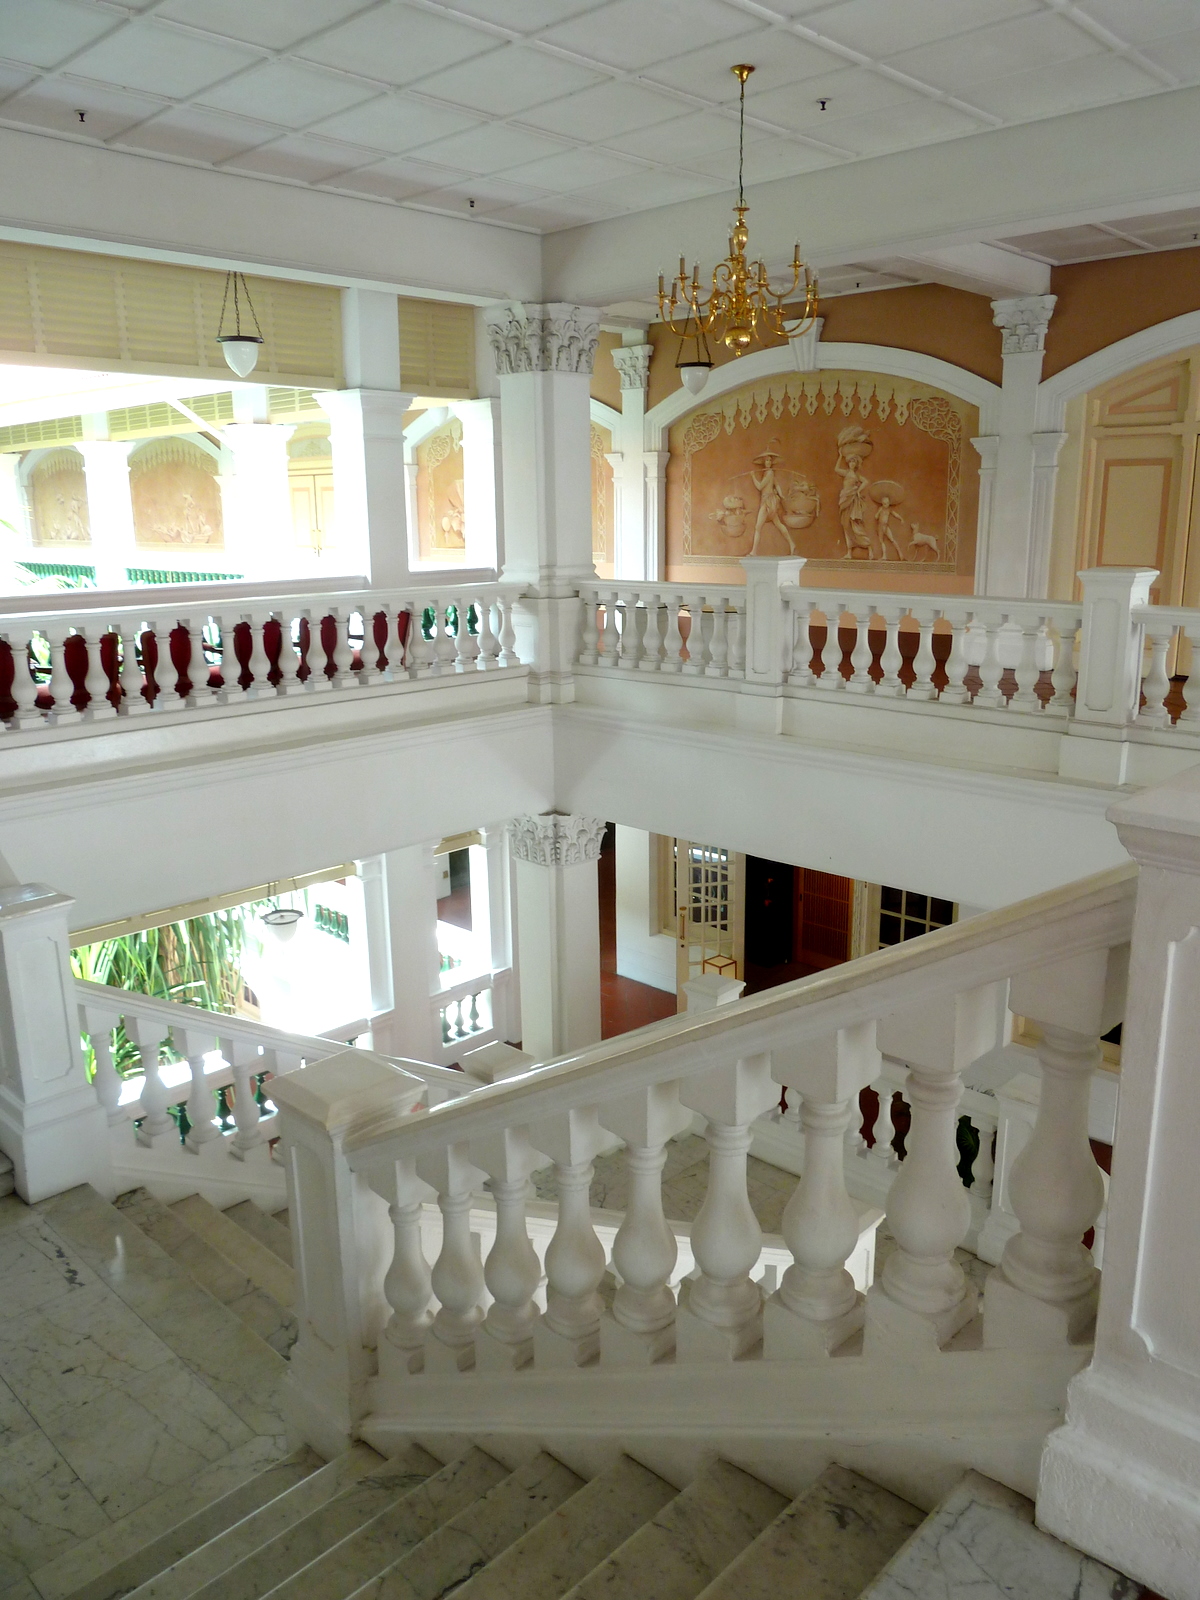 stairwell-raffles-hotel-singapore